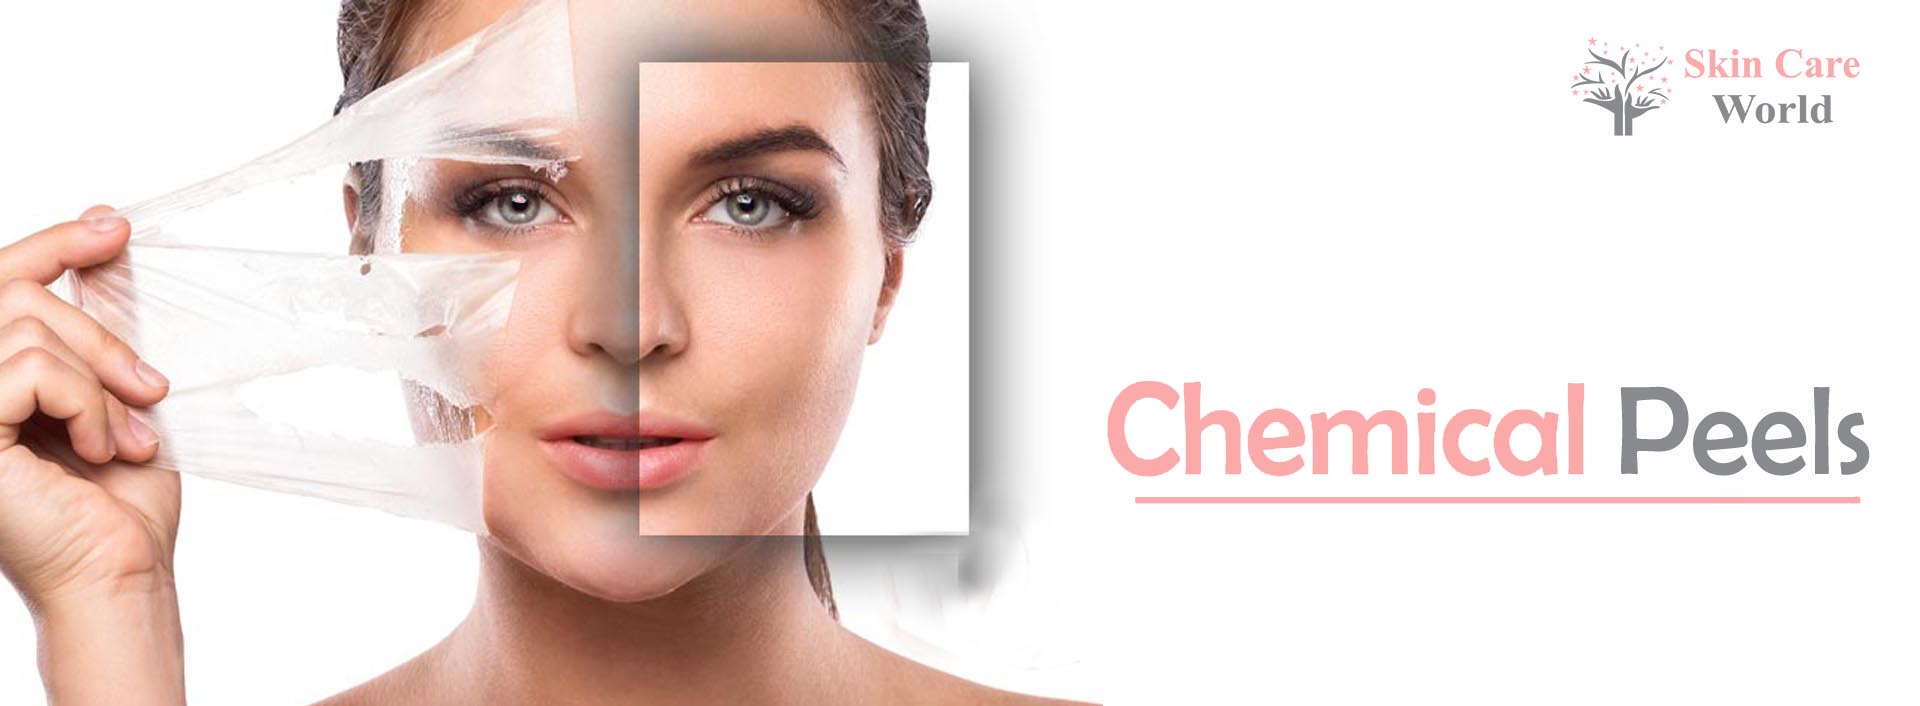 Chemical Peels Can Safely Rejuvenate Face, Neck and Hands - Penn Medicine  Lancaster General Health